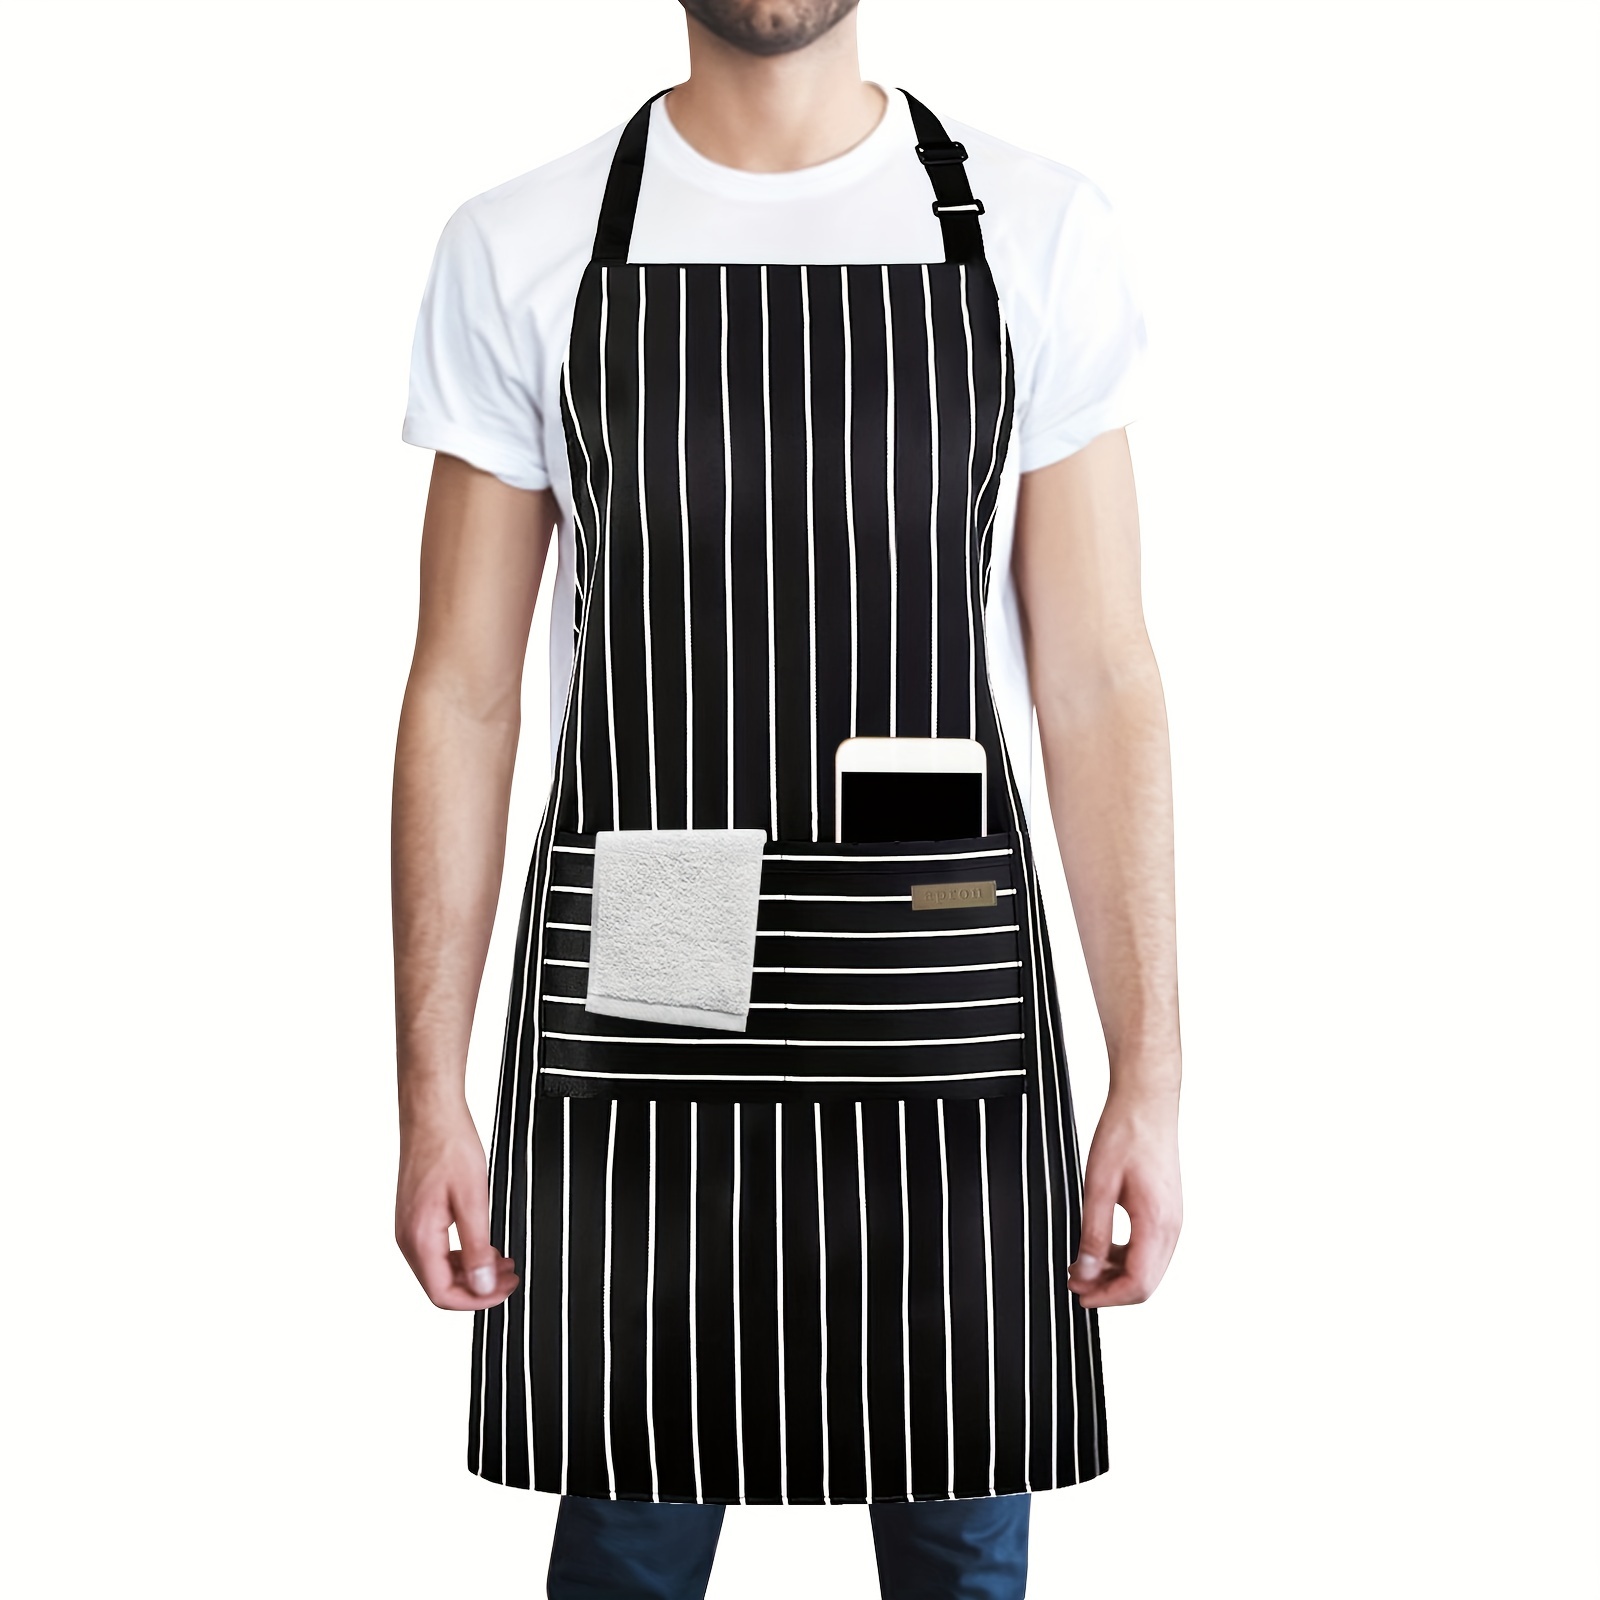 Pantalones de Chef a cuadros para mujer, uniforme de cocina - AliExpress